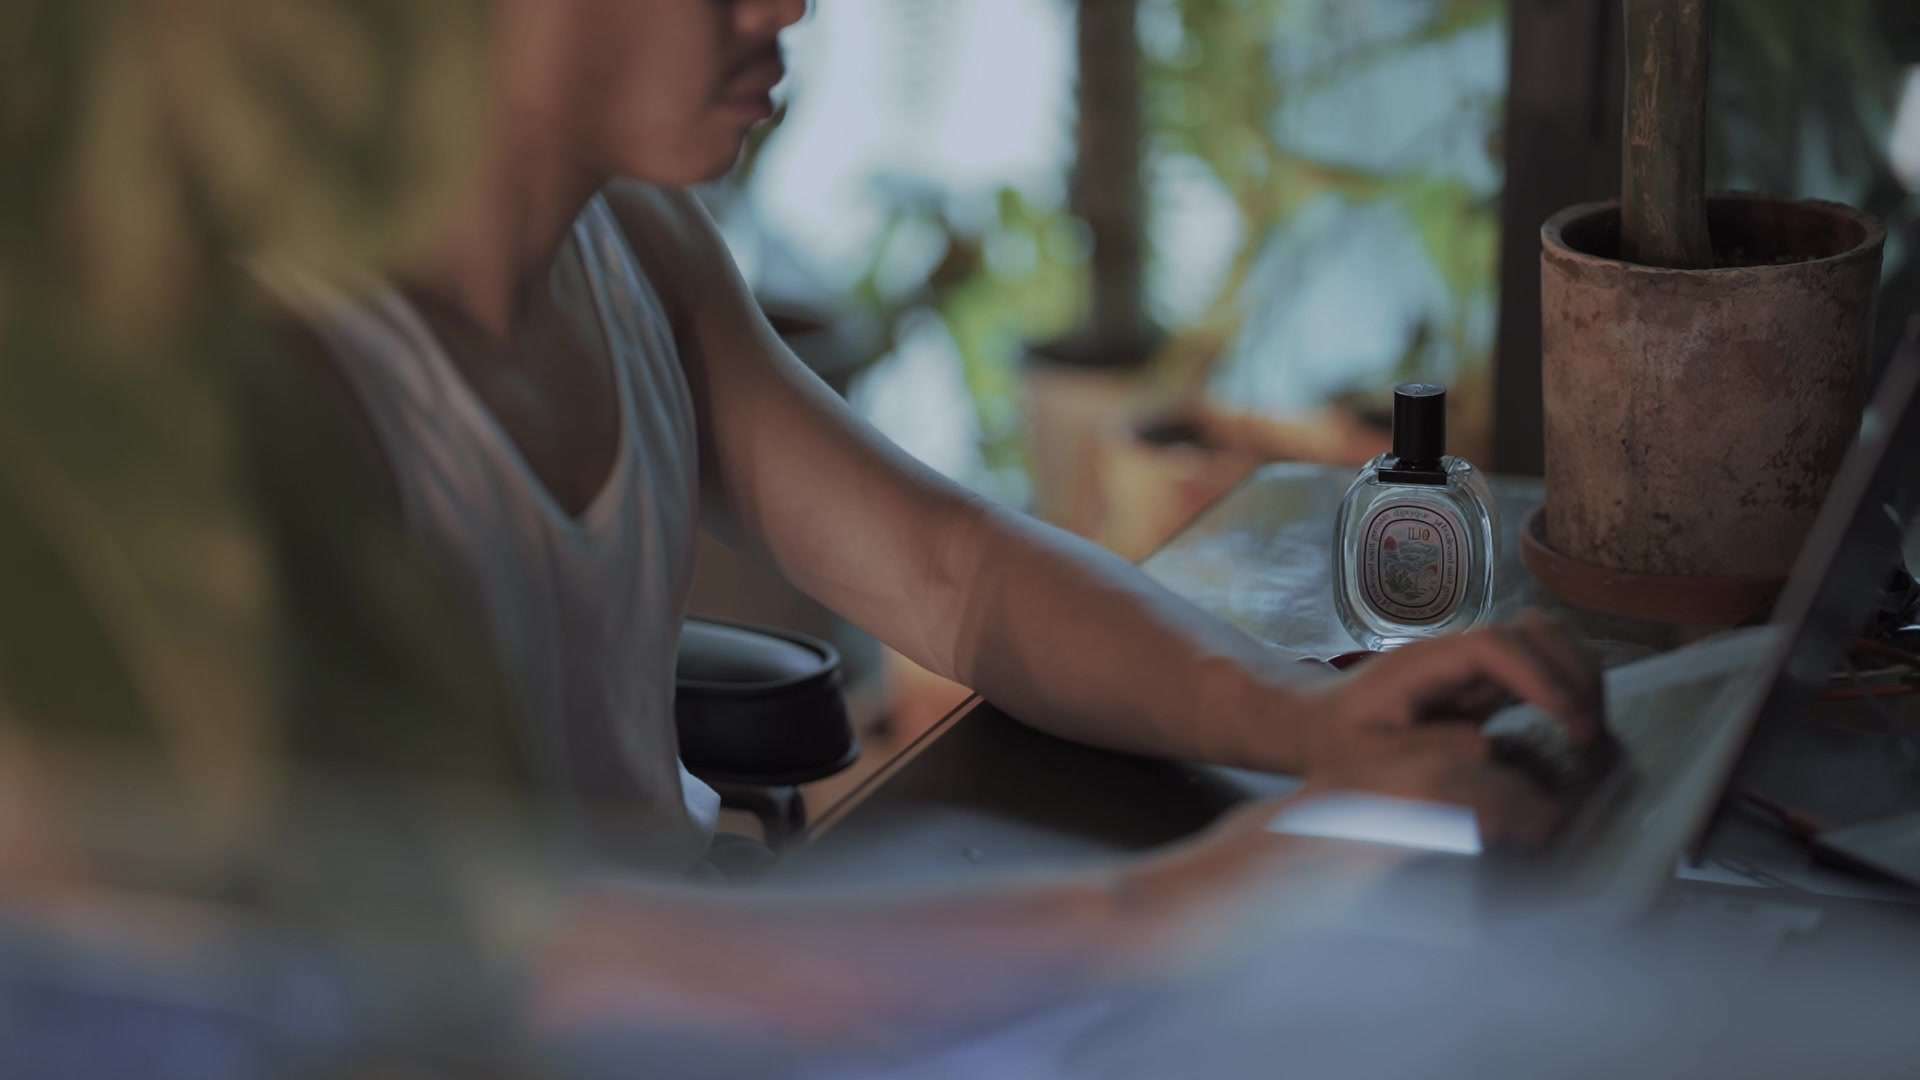 DIPTYQUE 蒂普提克 夏季限量版 ILIO 香水广告创意微电影